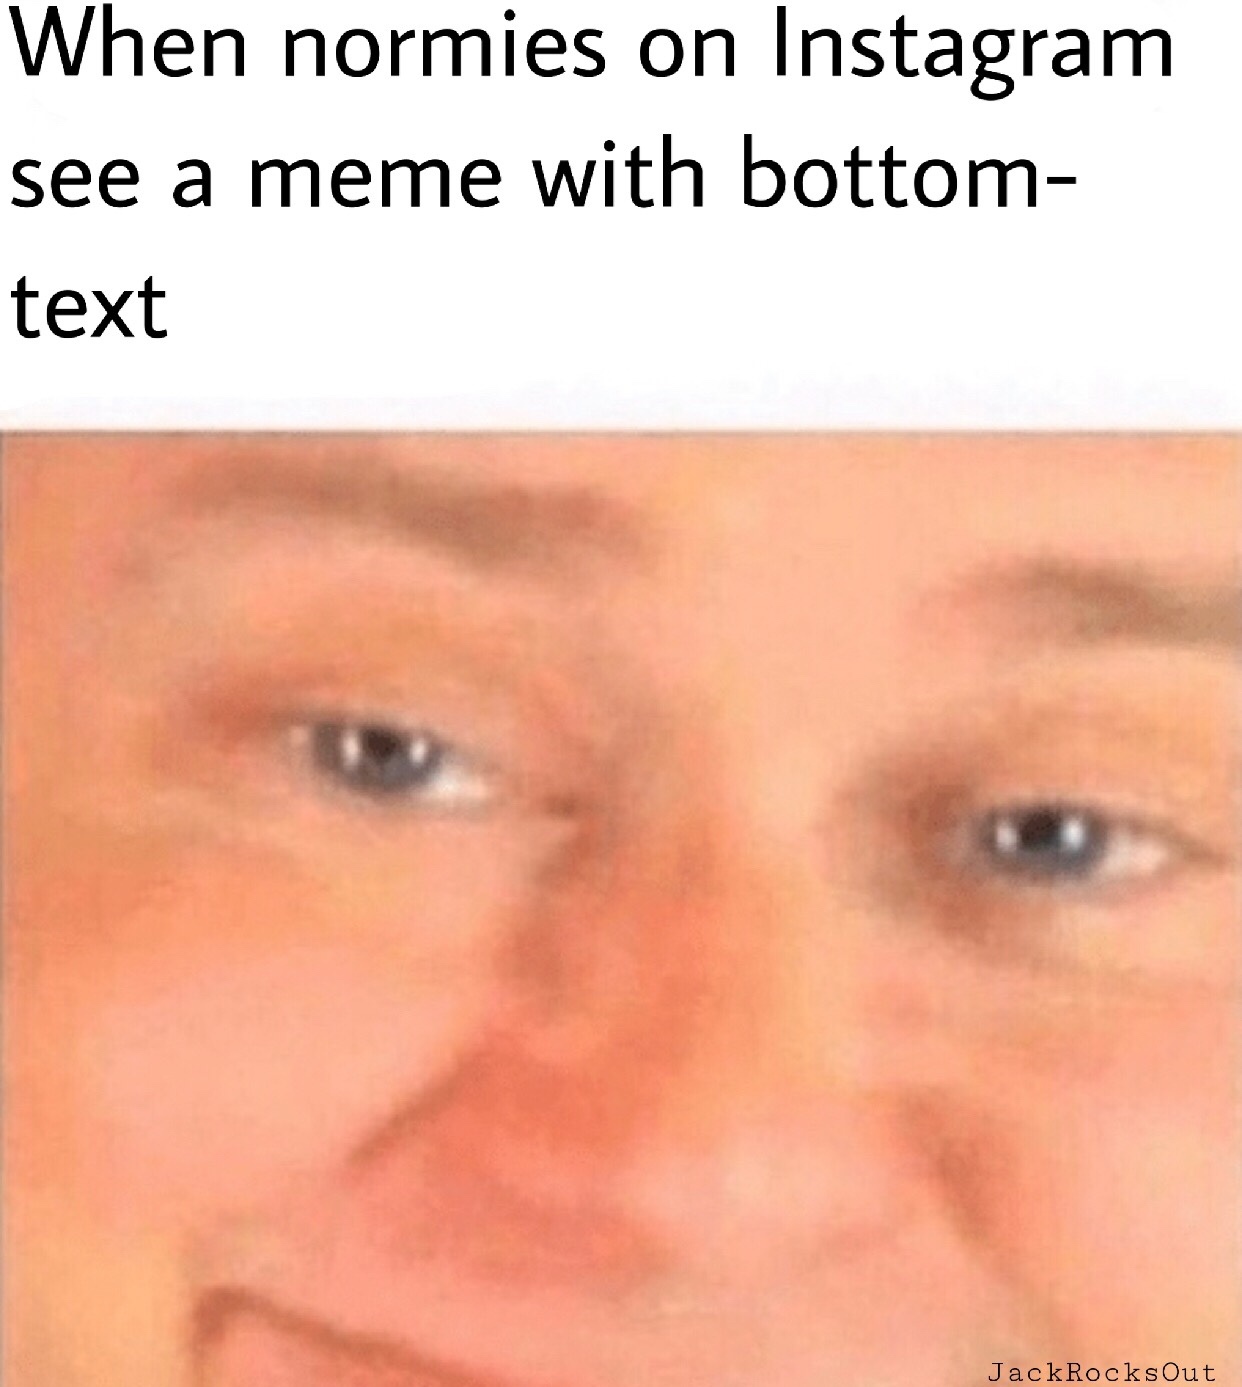 Bottomtext - meme